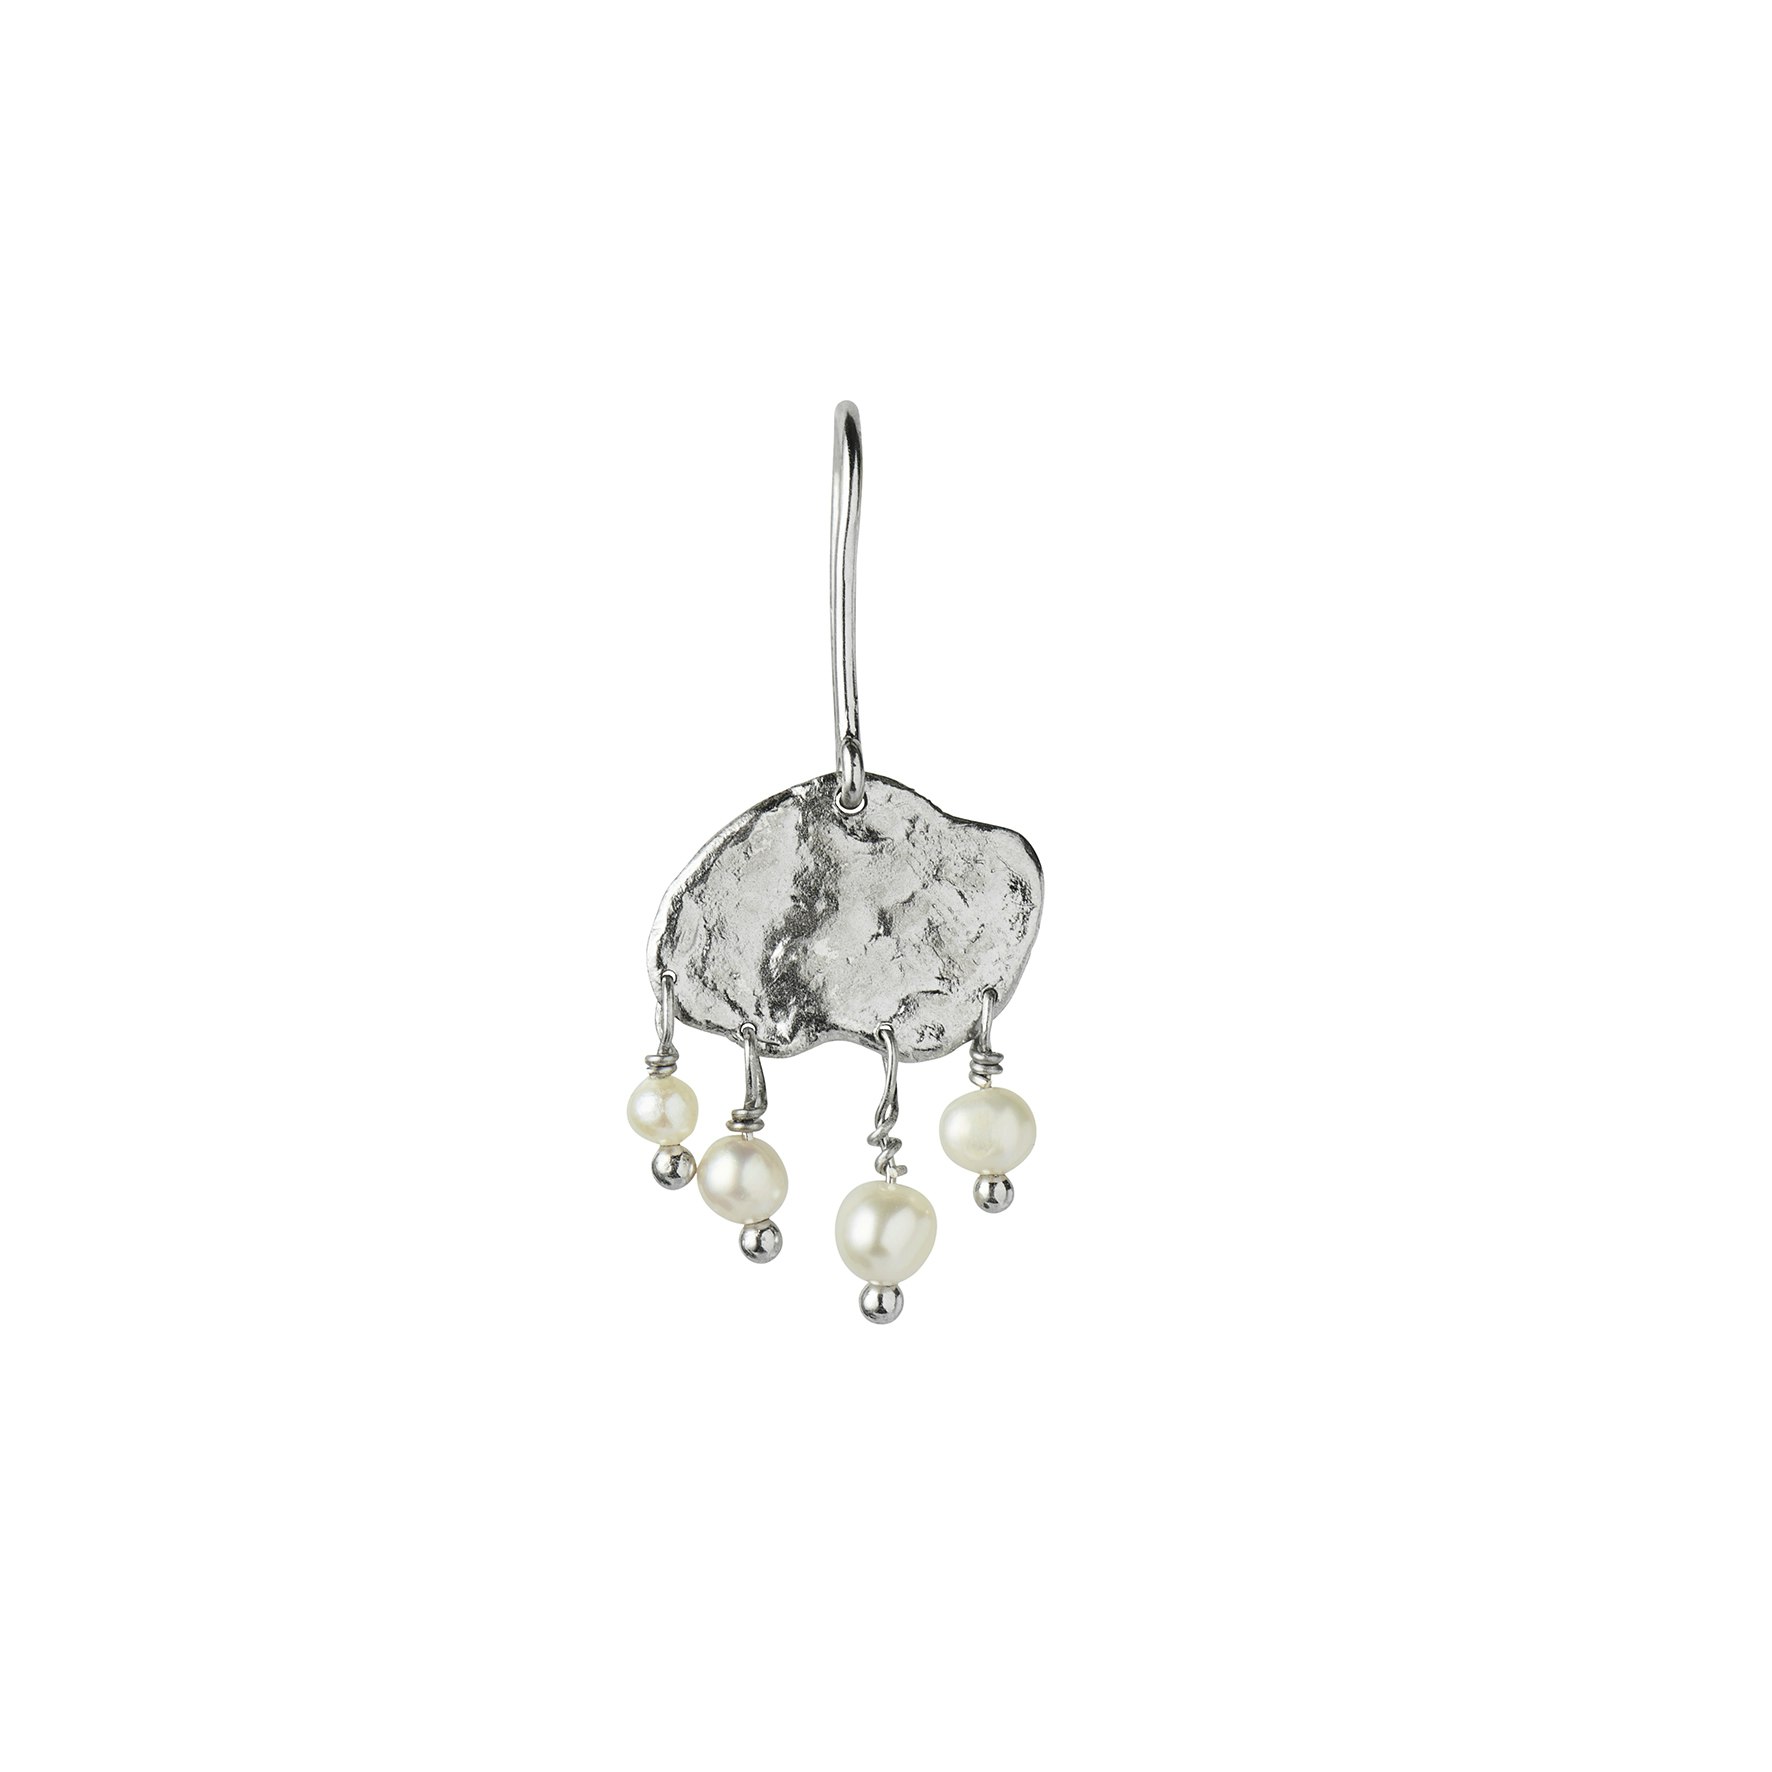 Big Gold Splash Earring – Elegant Pearls von STINE A Jewelry in Silber Sterling 925